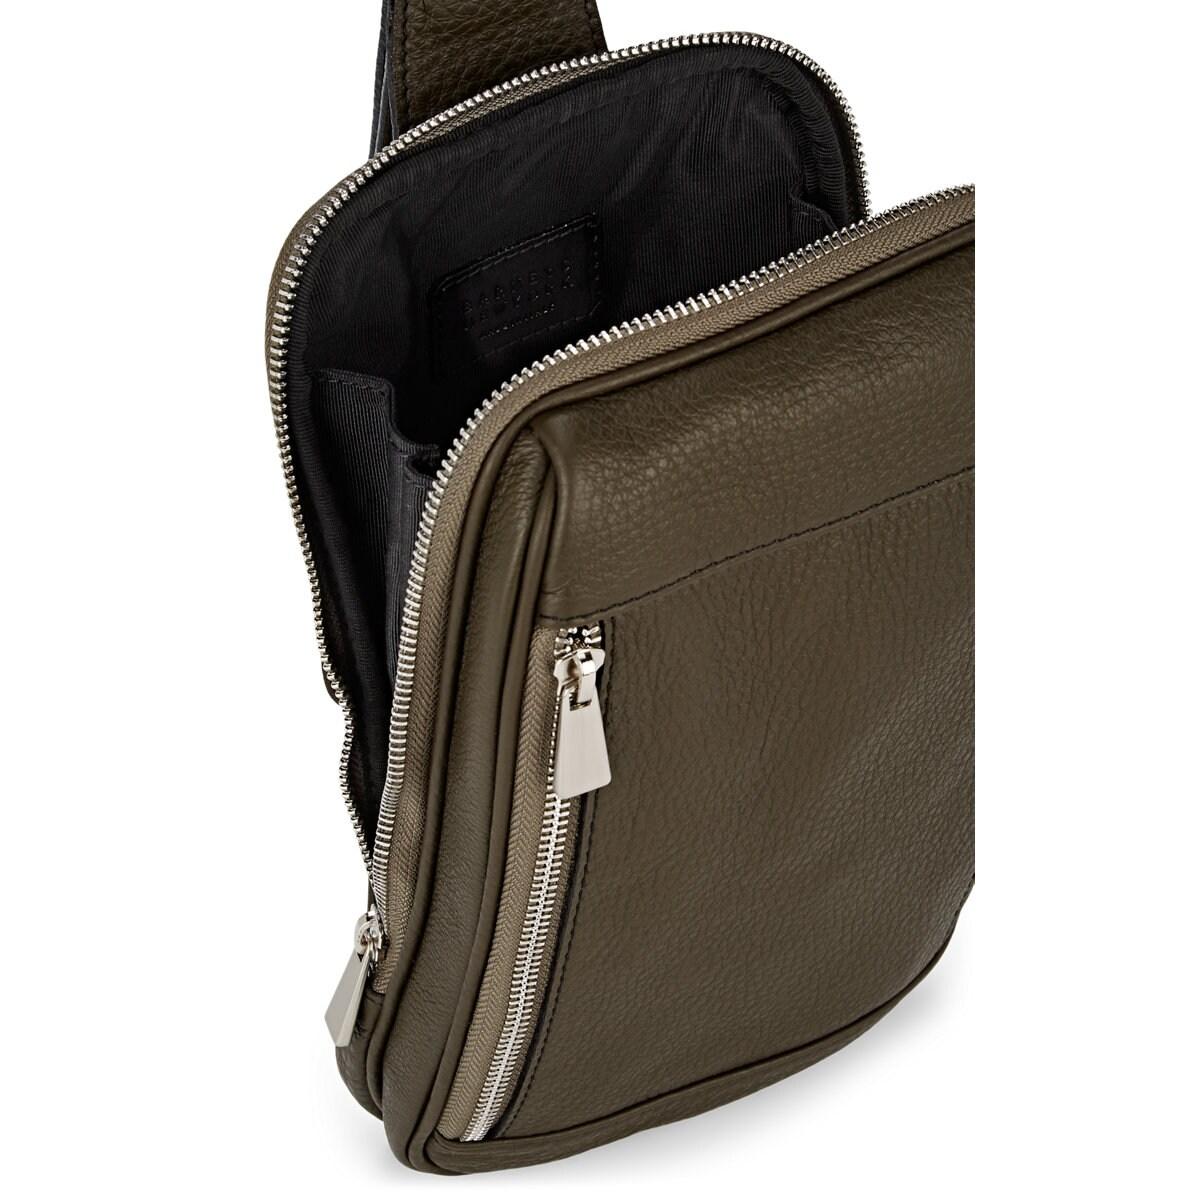 Barneys New York Leather Belt Bag in Olive (Green) for Men - Lyst